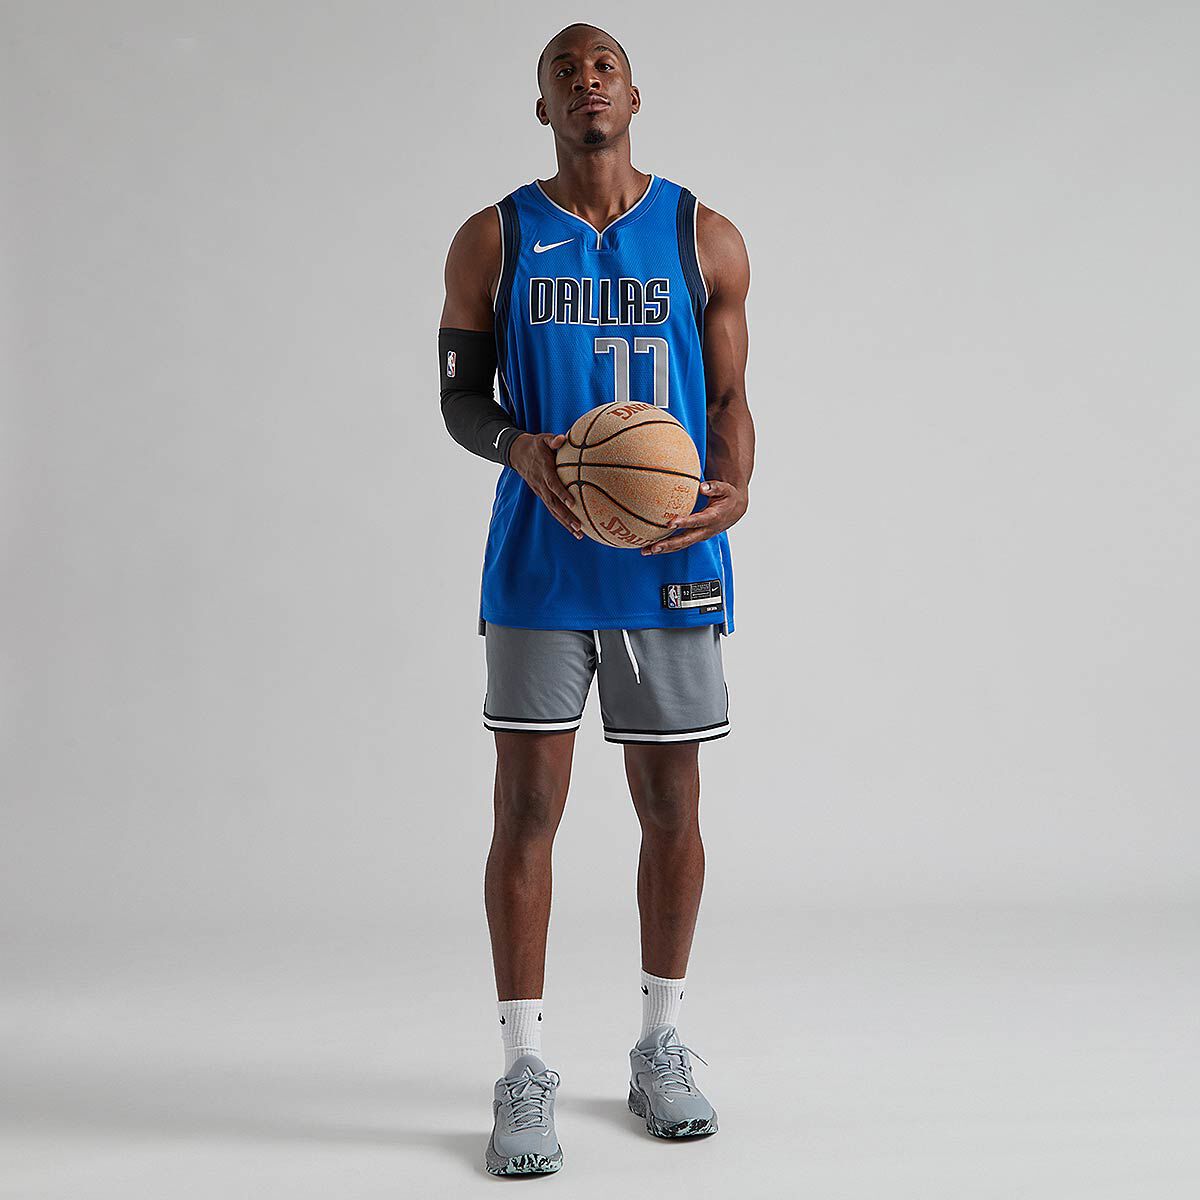 Buy NBA Shooter Sleeve 2.0 Pair for GBP 33.95 on KICKZ.com!